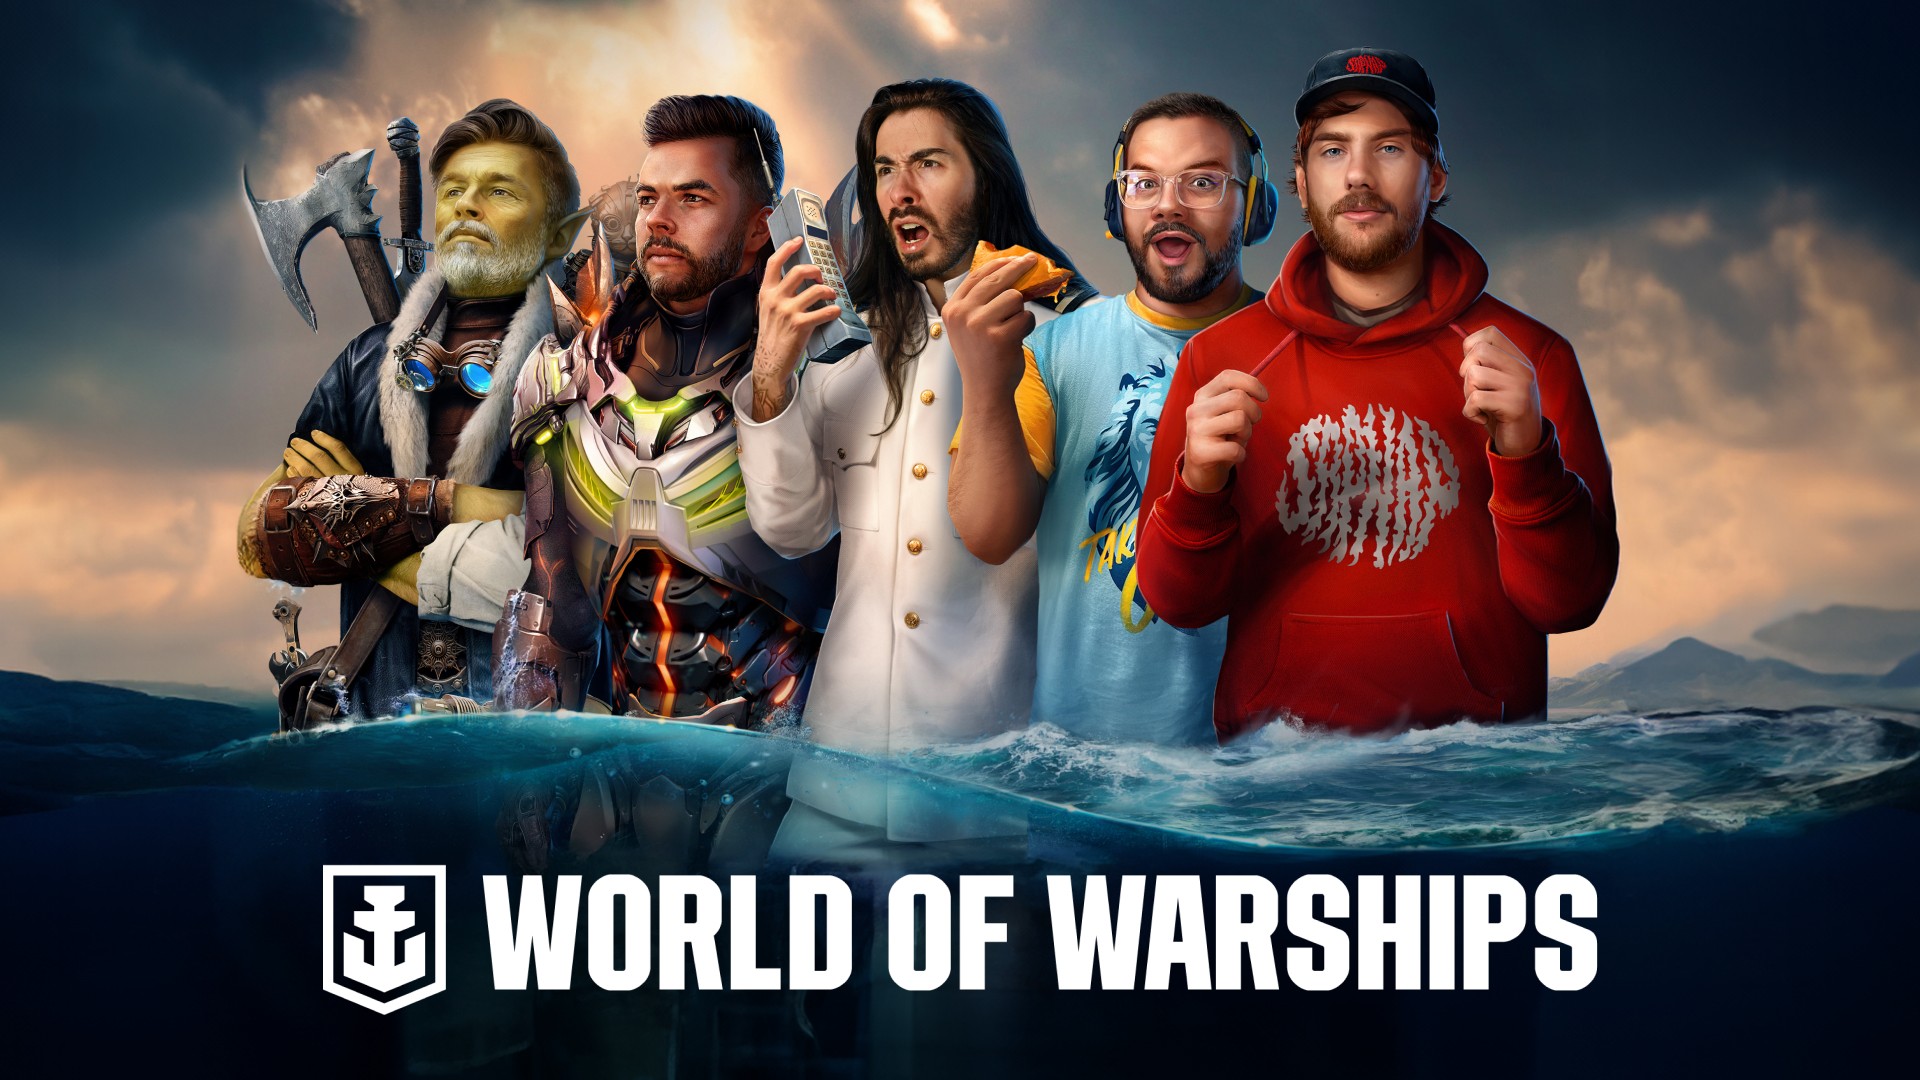 Content Creators Commandeer The High Seas In World of Warships: Legends’s February Update